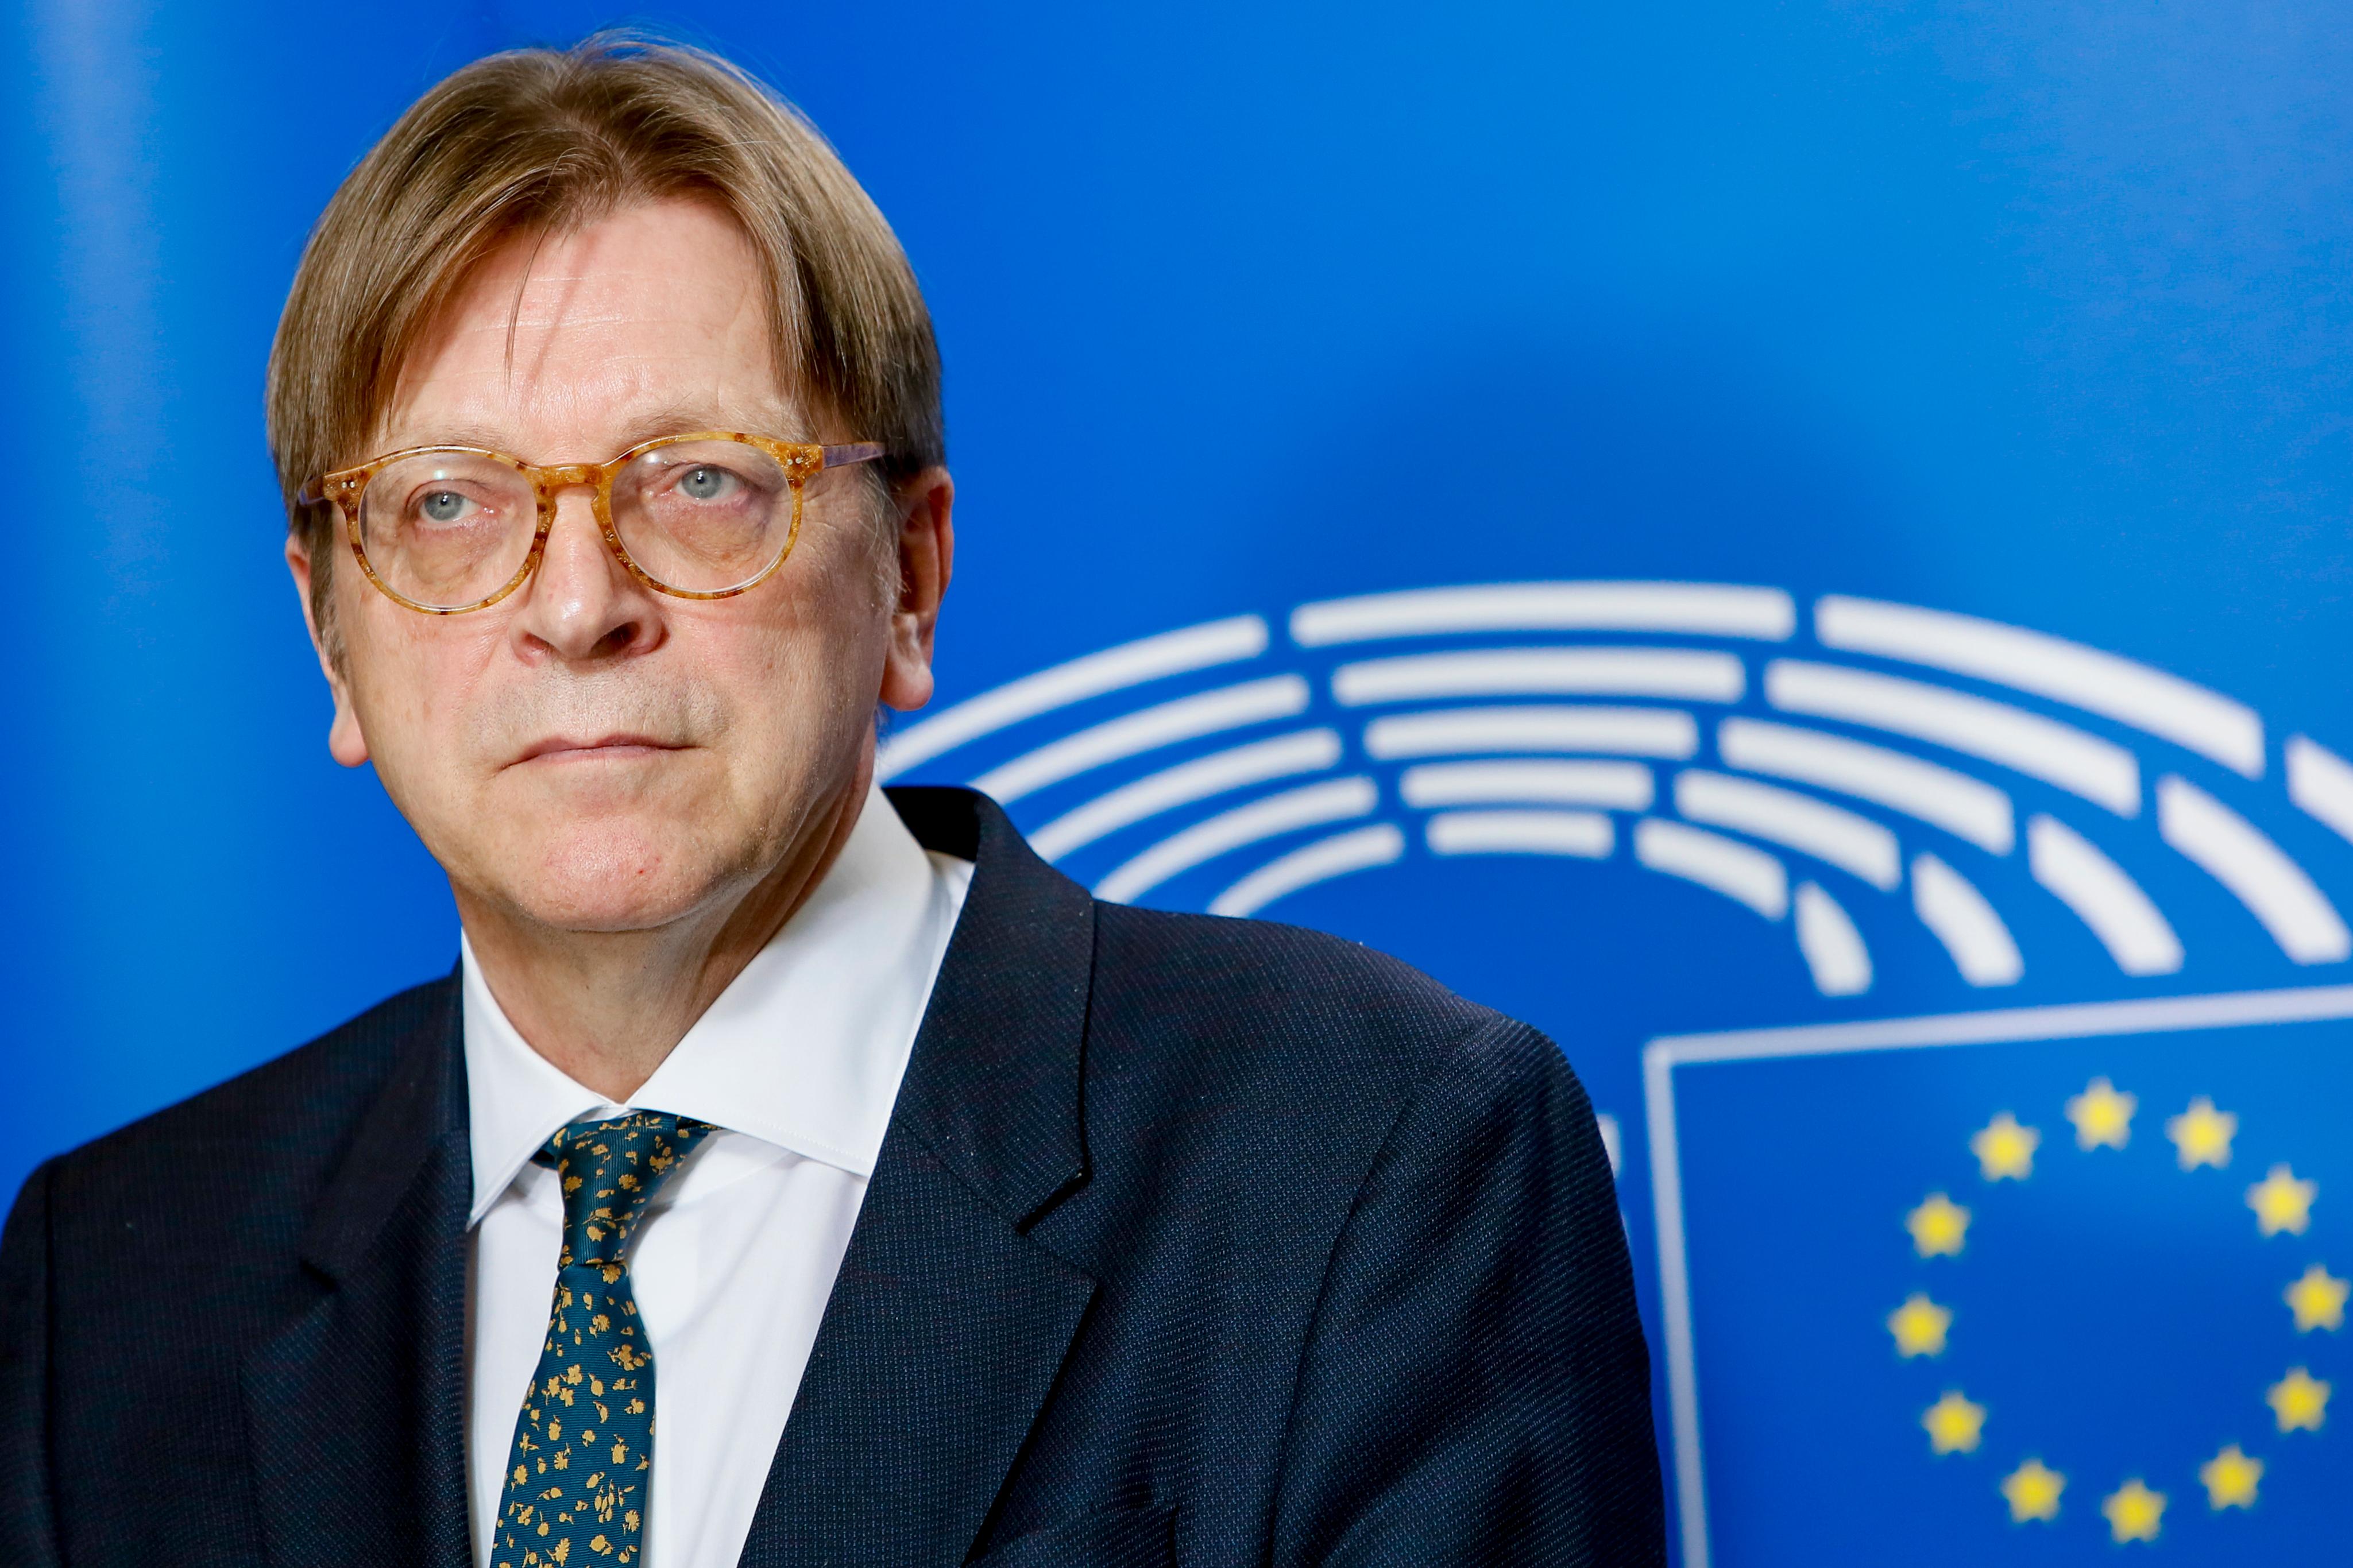 guy-verhofstadt1-press-point-15-sep-17-source-ep-copyright-eu-2017.jpg